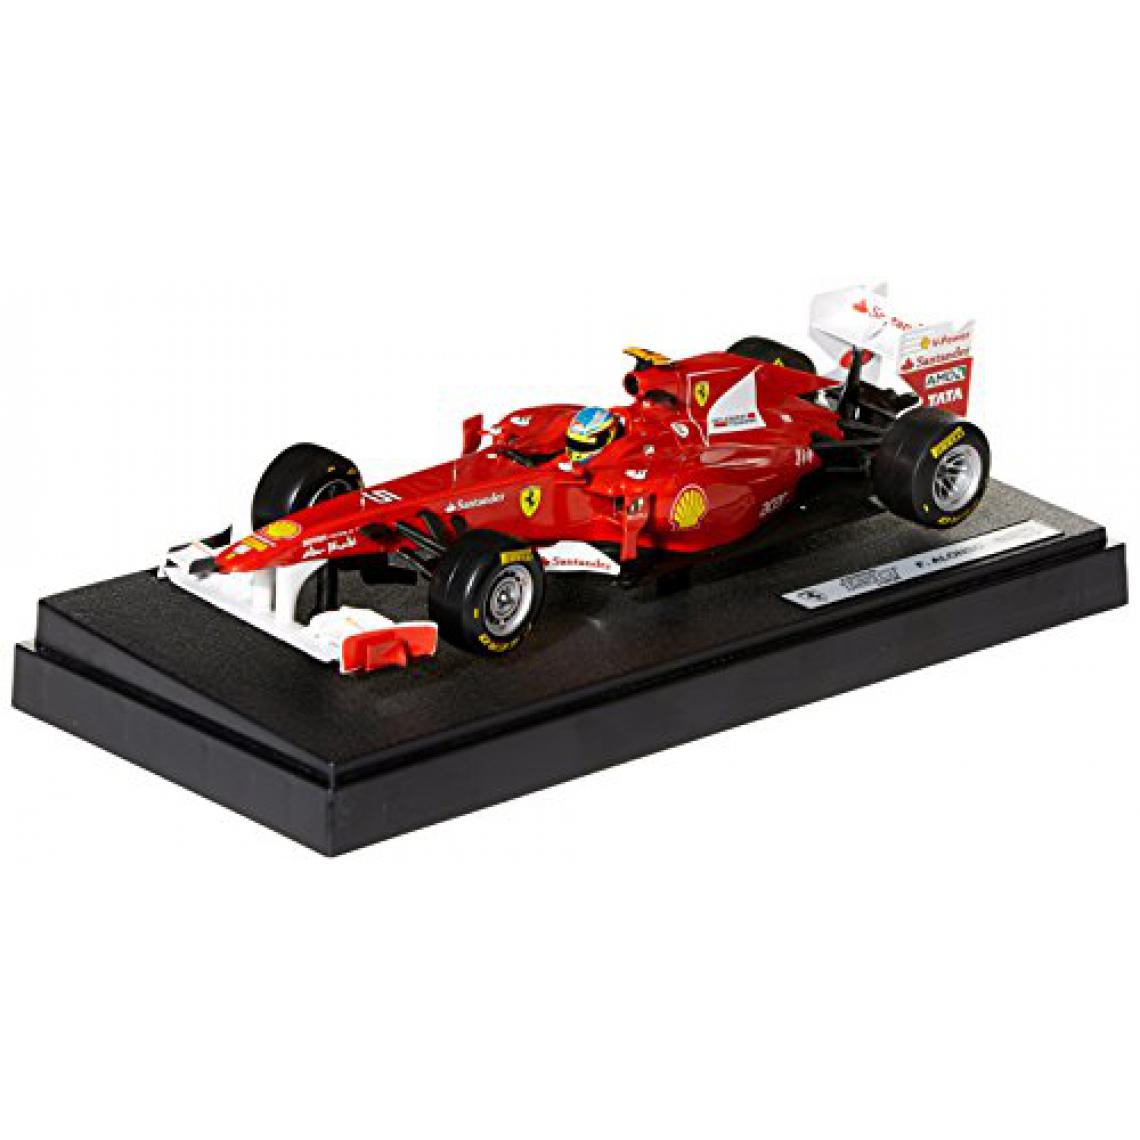 Hot Wheels - Hot Wheels W1073 Ferrari 150 Italia F2011 Fernando Alonso 1/18 Maquette de voiture miniature par Hotwheels - Accessoires maquettes